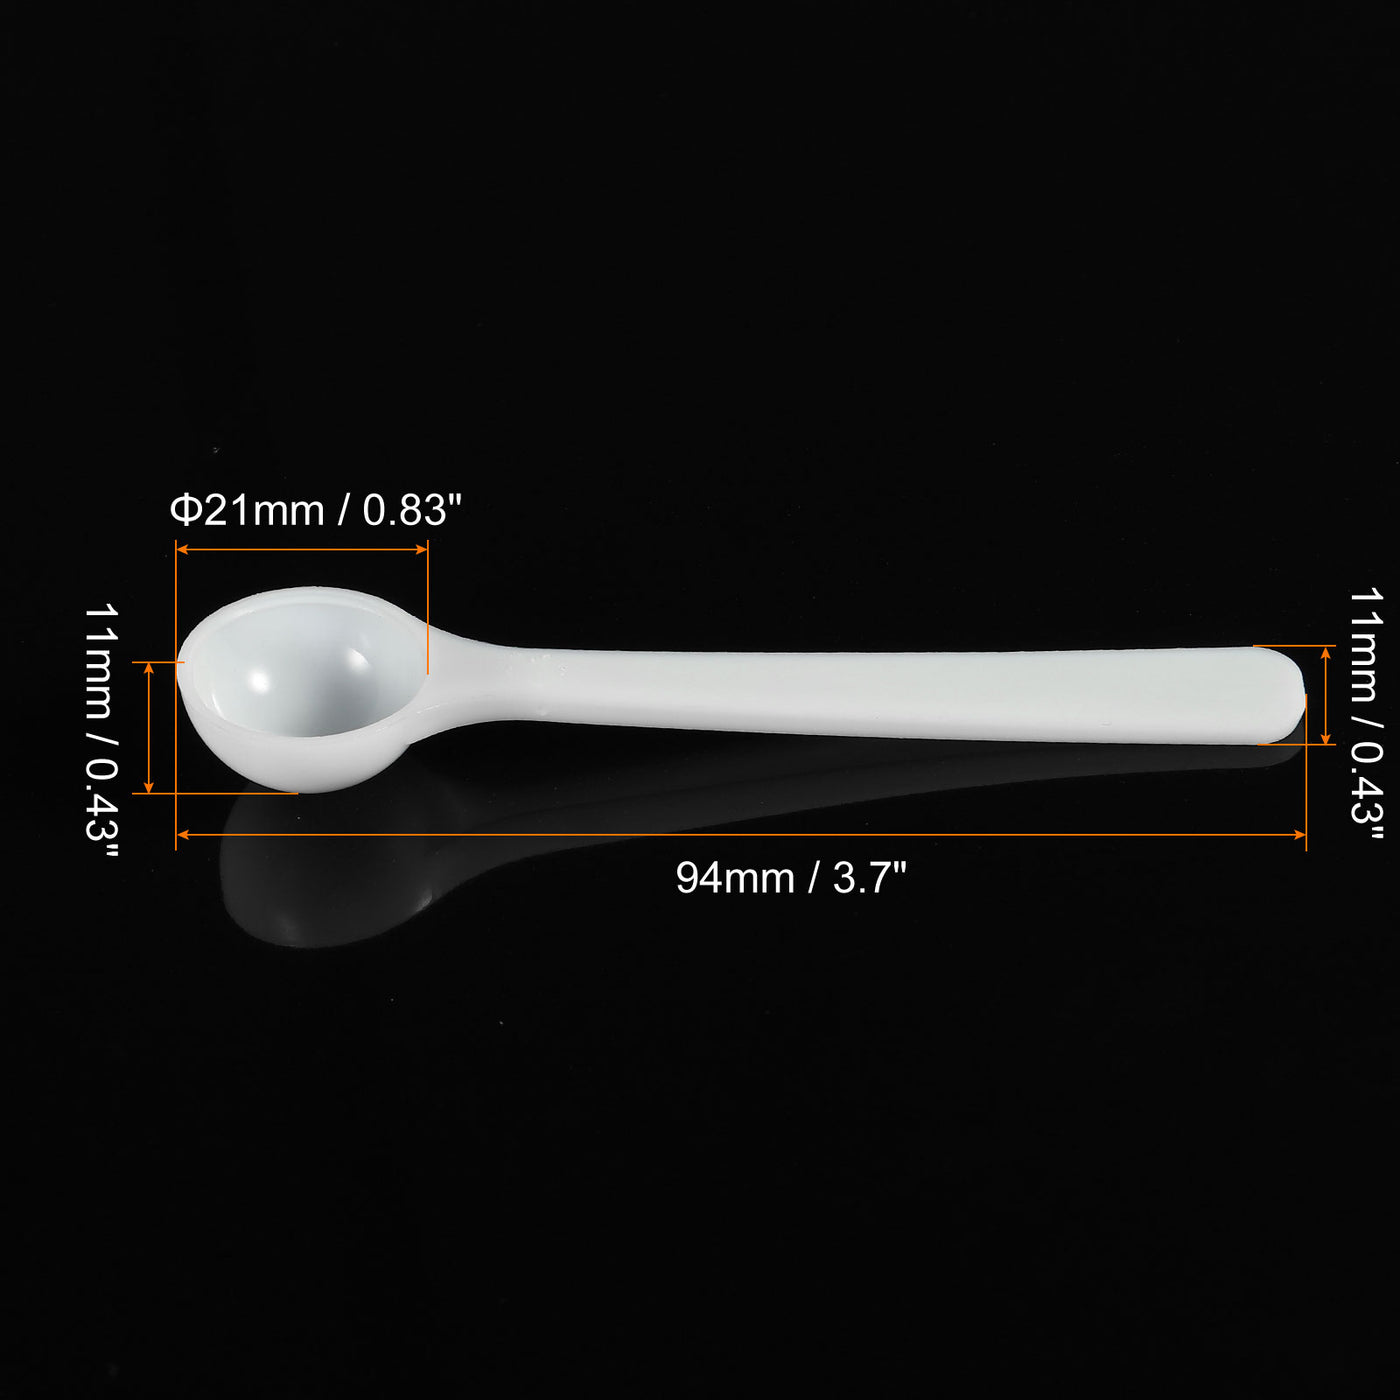 Harfington Micro Spoons 1 Gram Measuring Scoop Plastic Round Bottom Mini Spoon 30Pcs